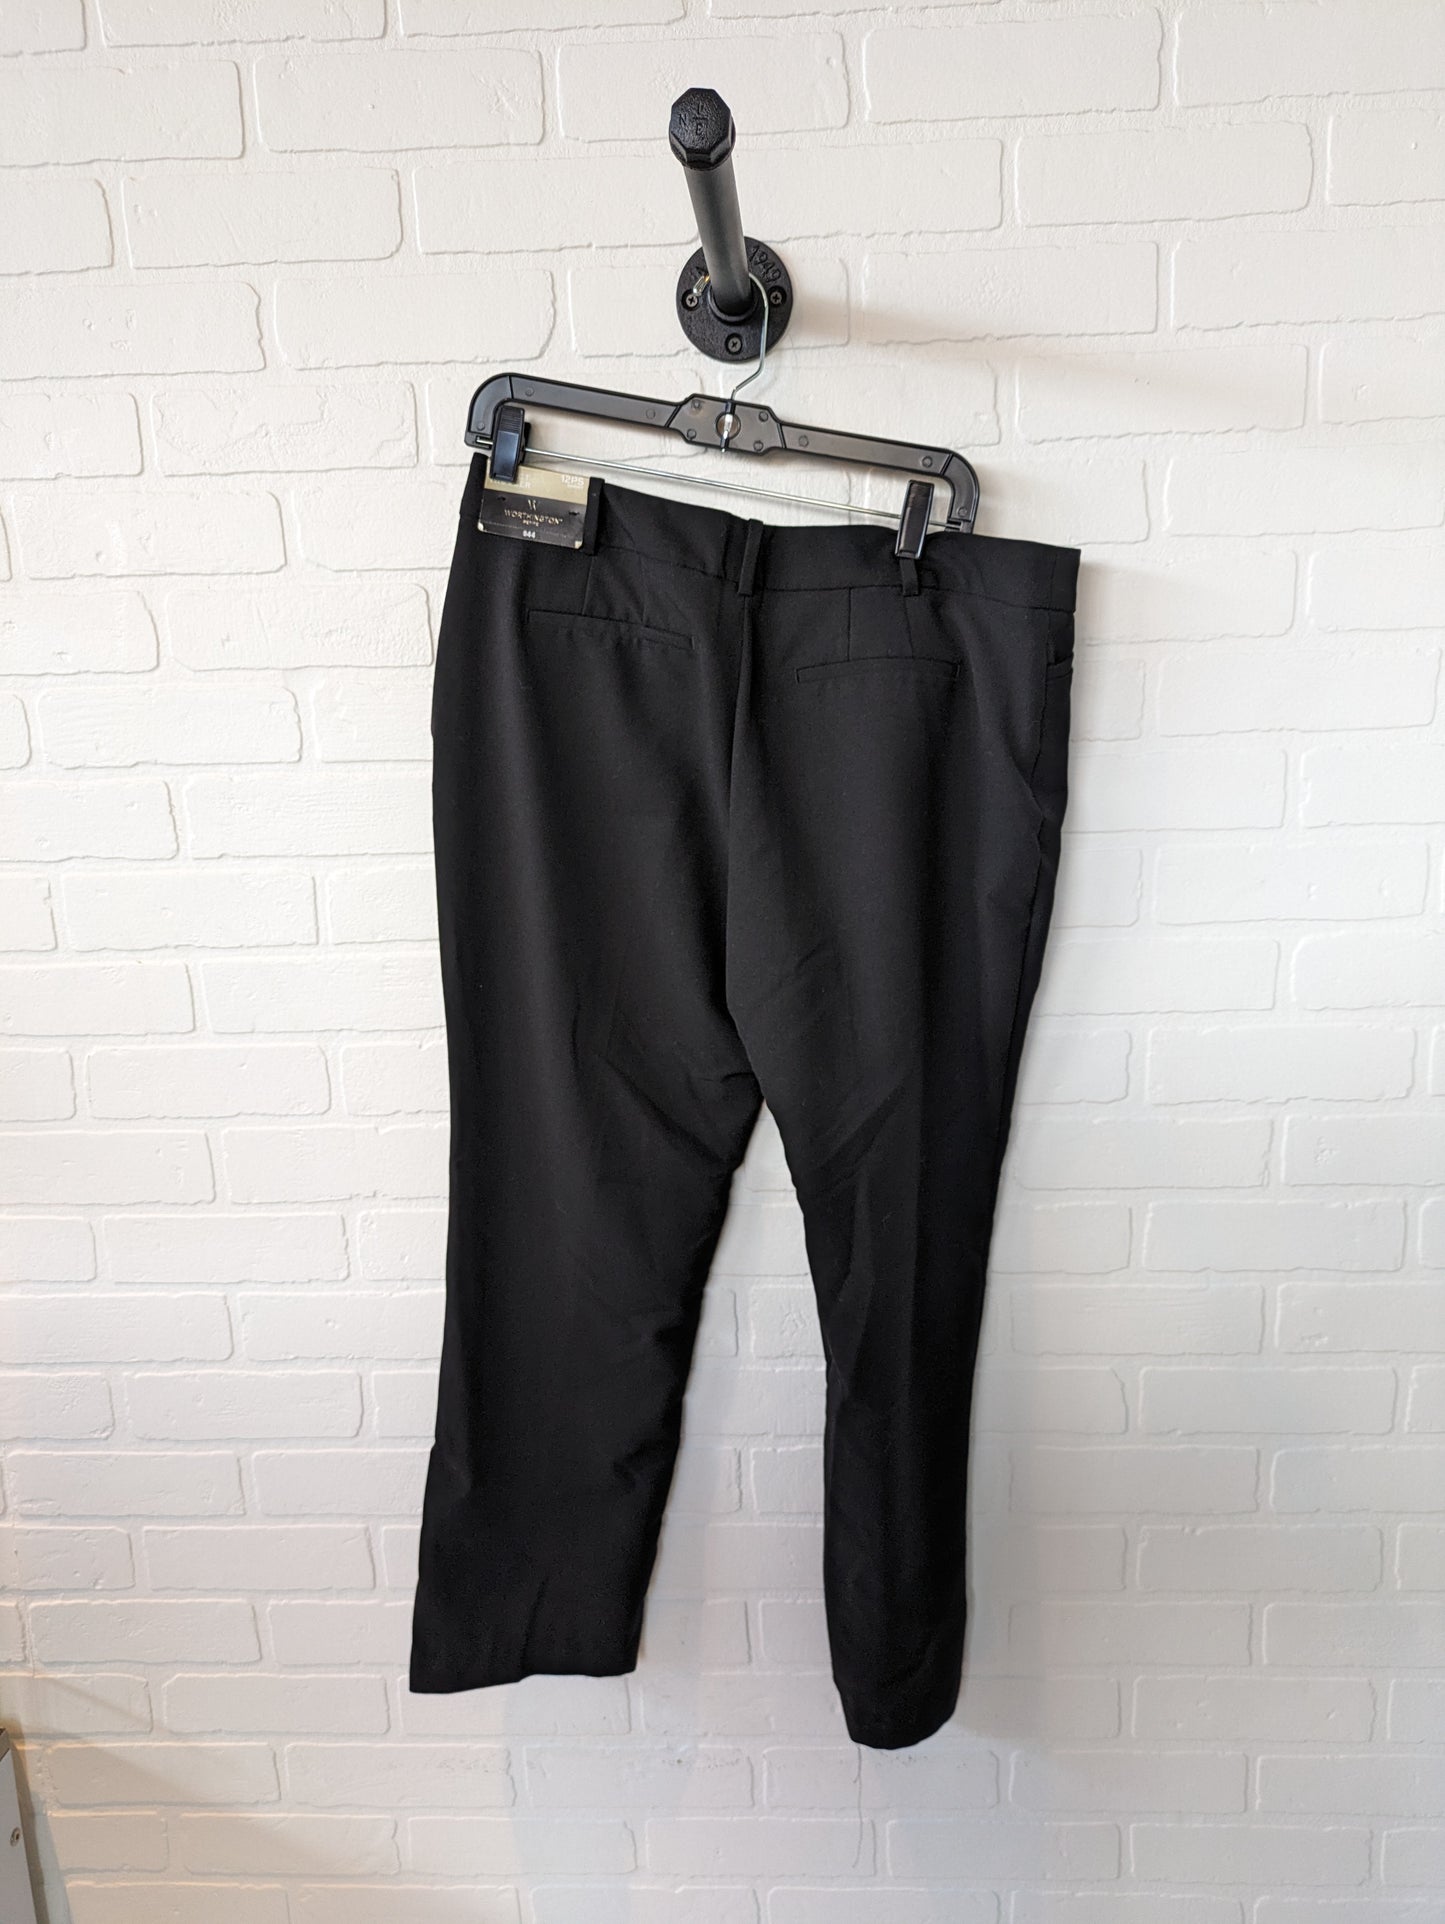 Pants Work/dress By Worthington  Size: 12petite